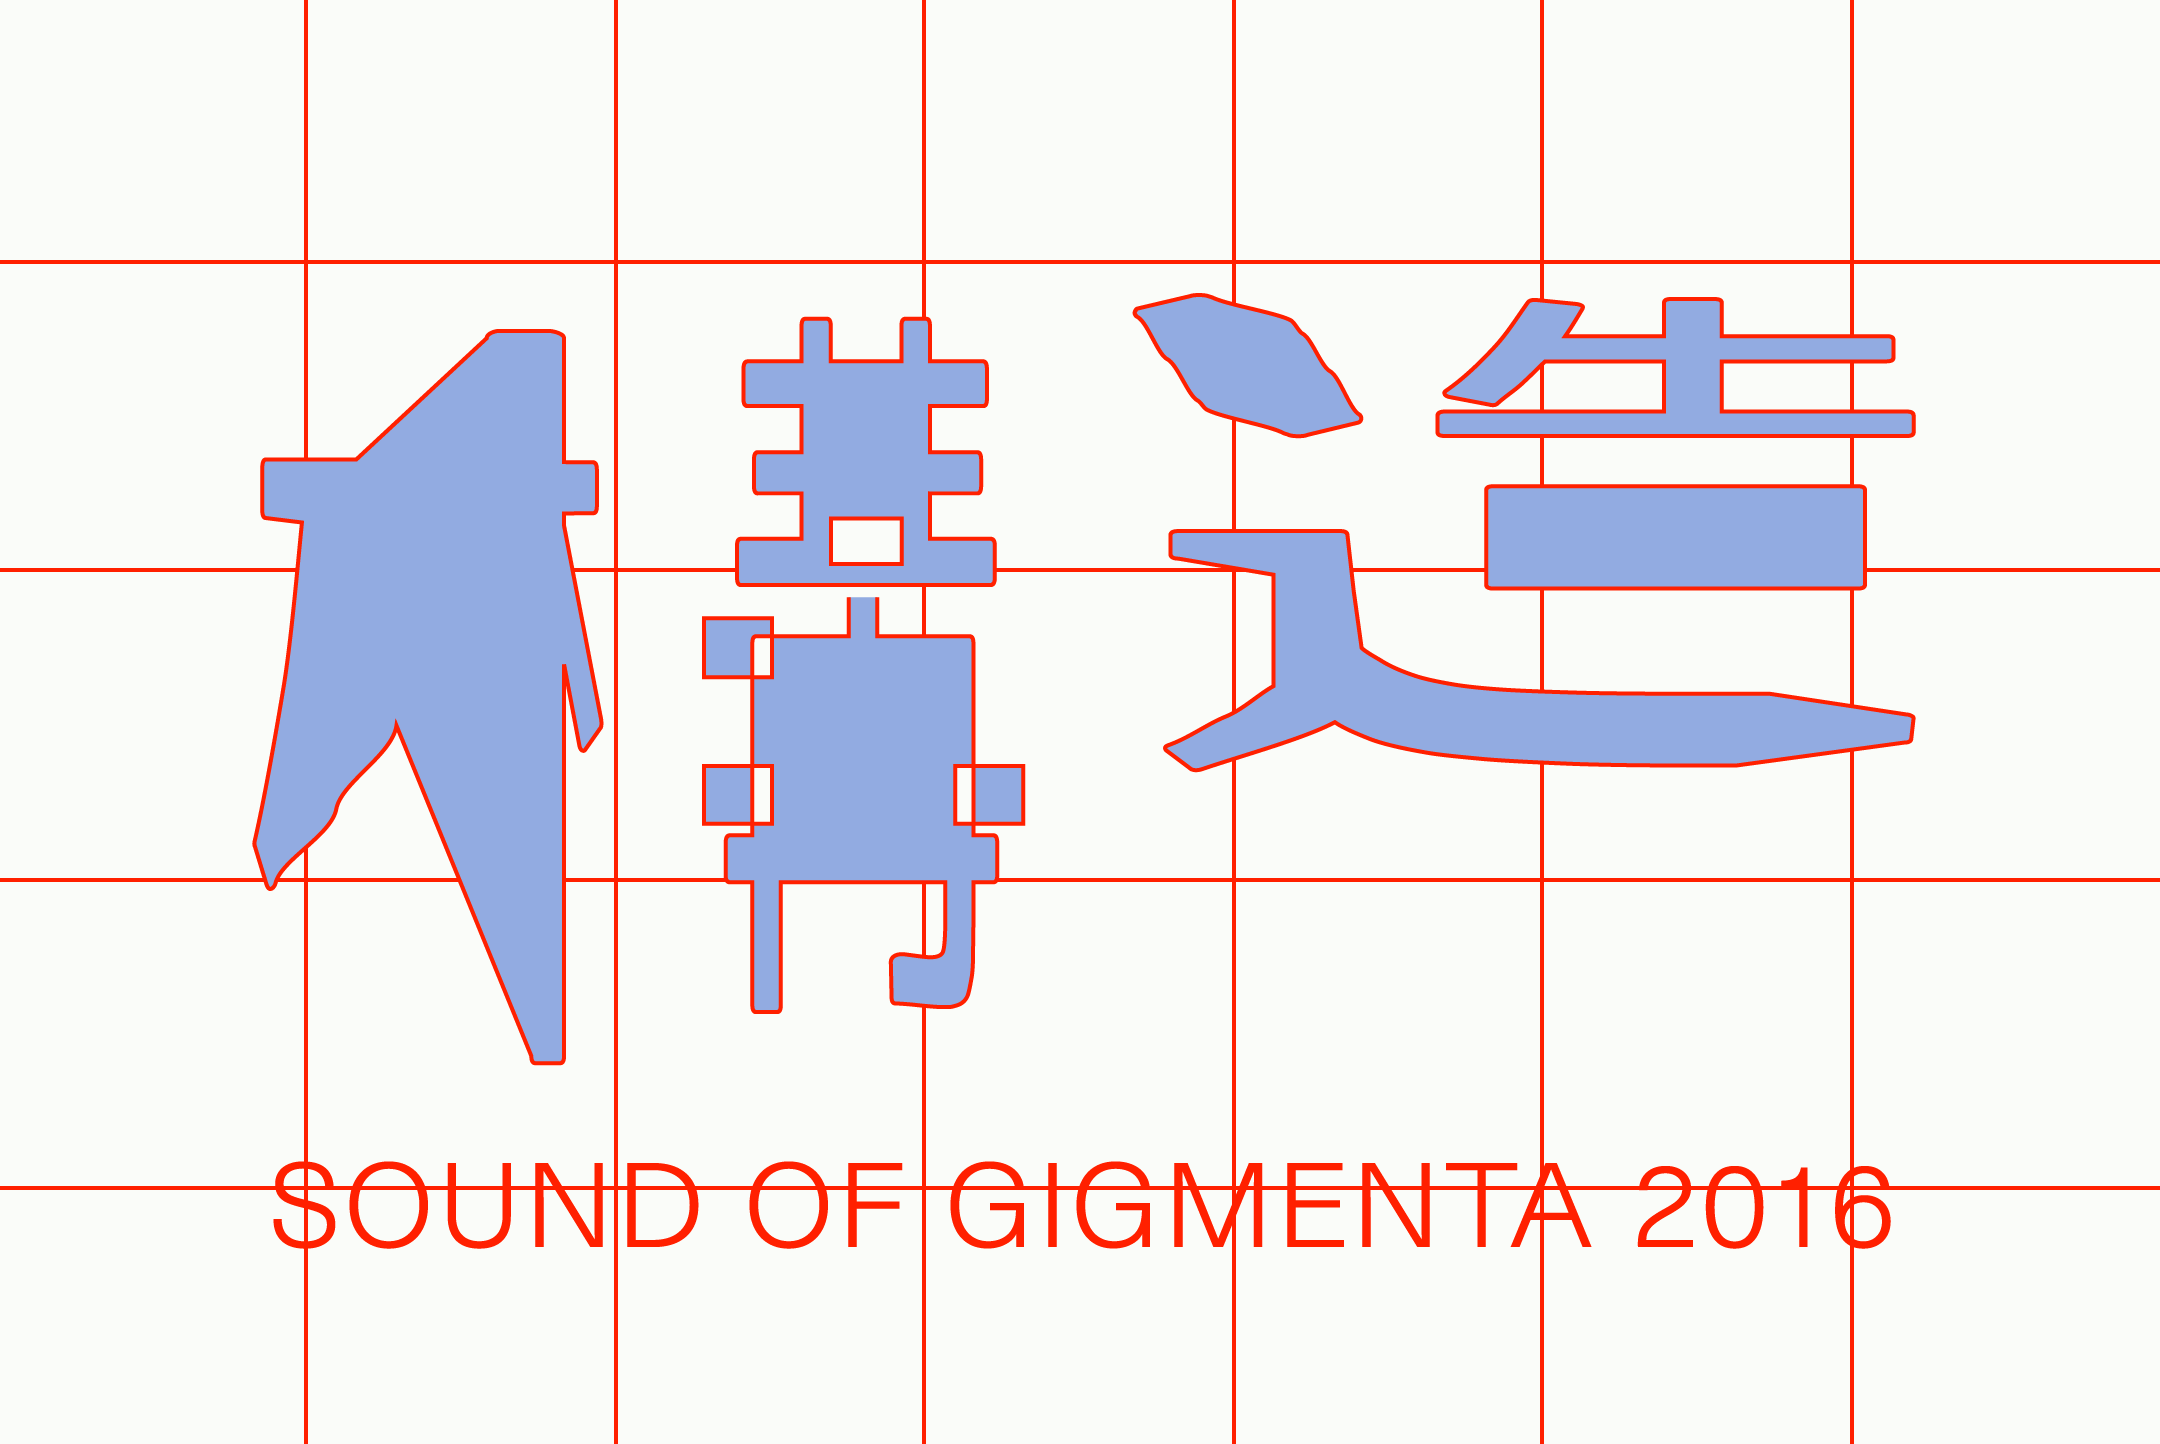 SOUND OF GIGMENTA 2016 『構造』